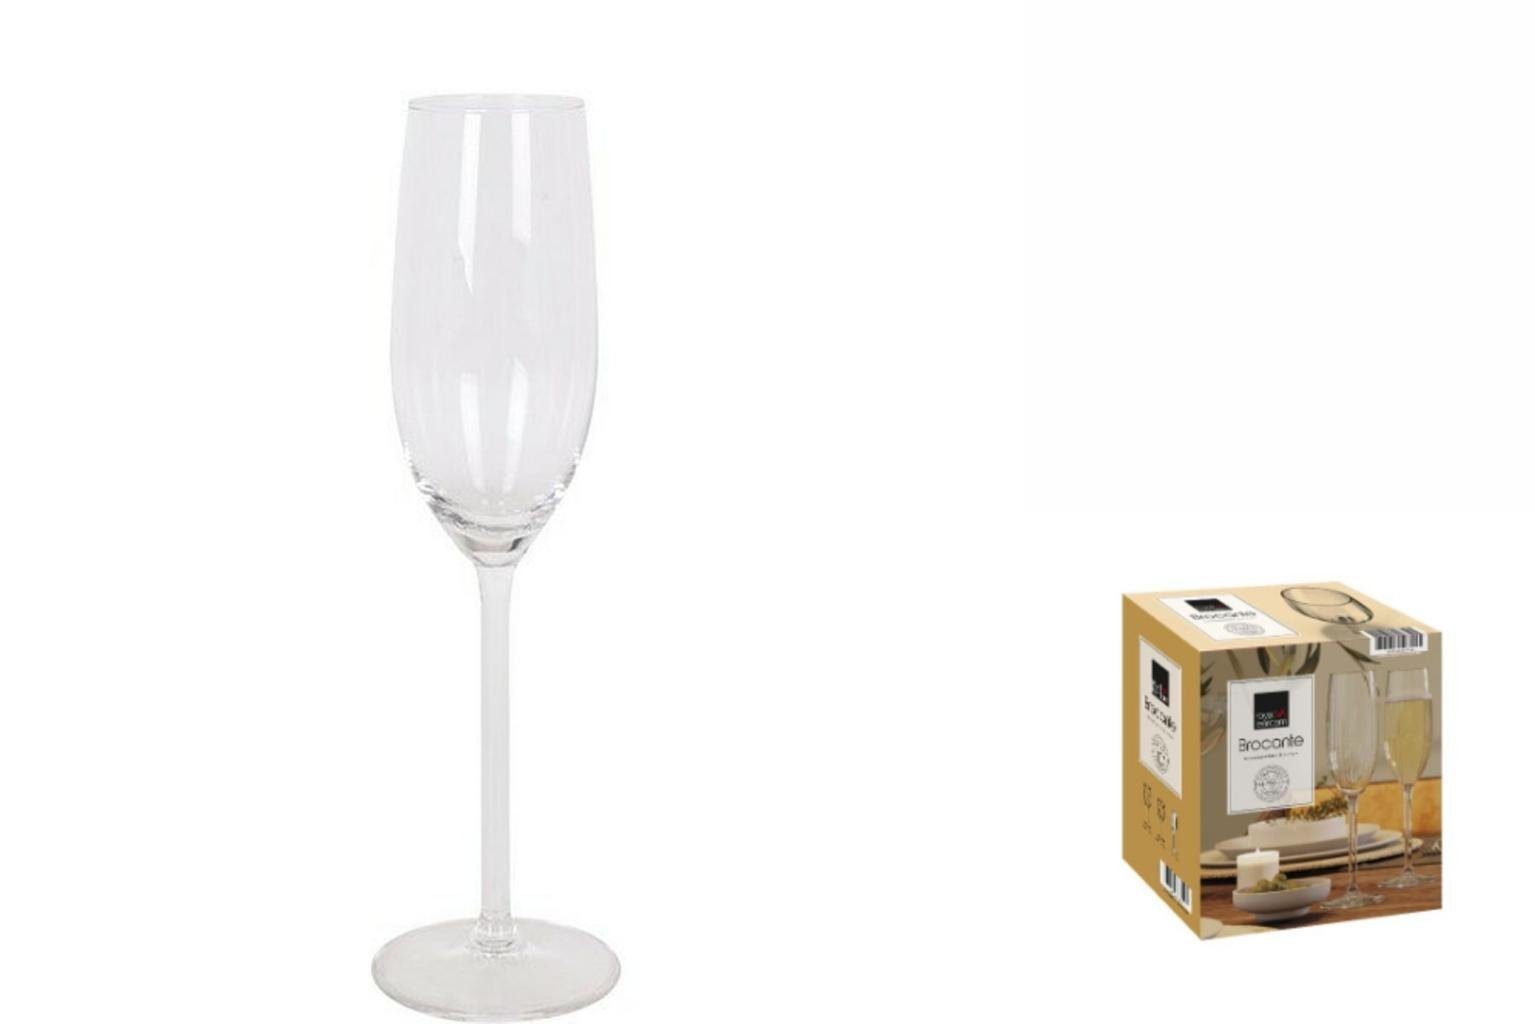 Royal Leerdam Glas Gläsersatz Brocante 210 champagne 6 Stück Royal Leerdam ml